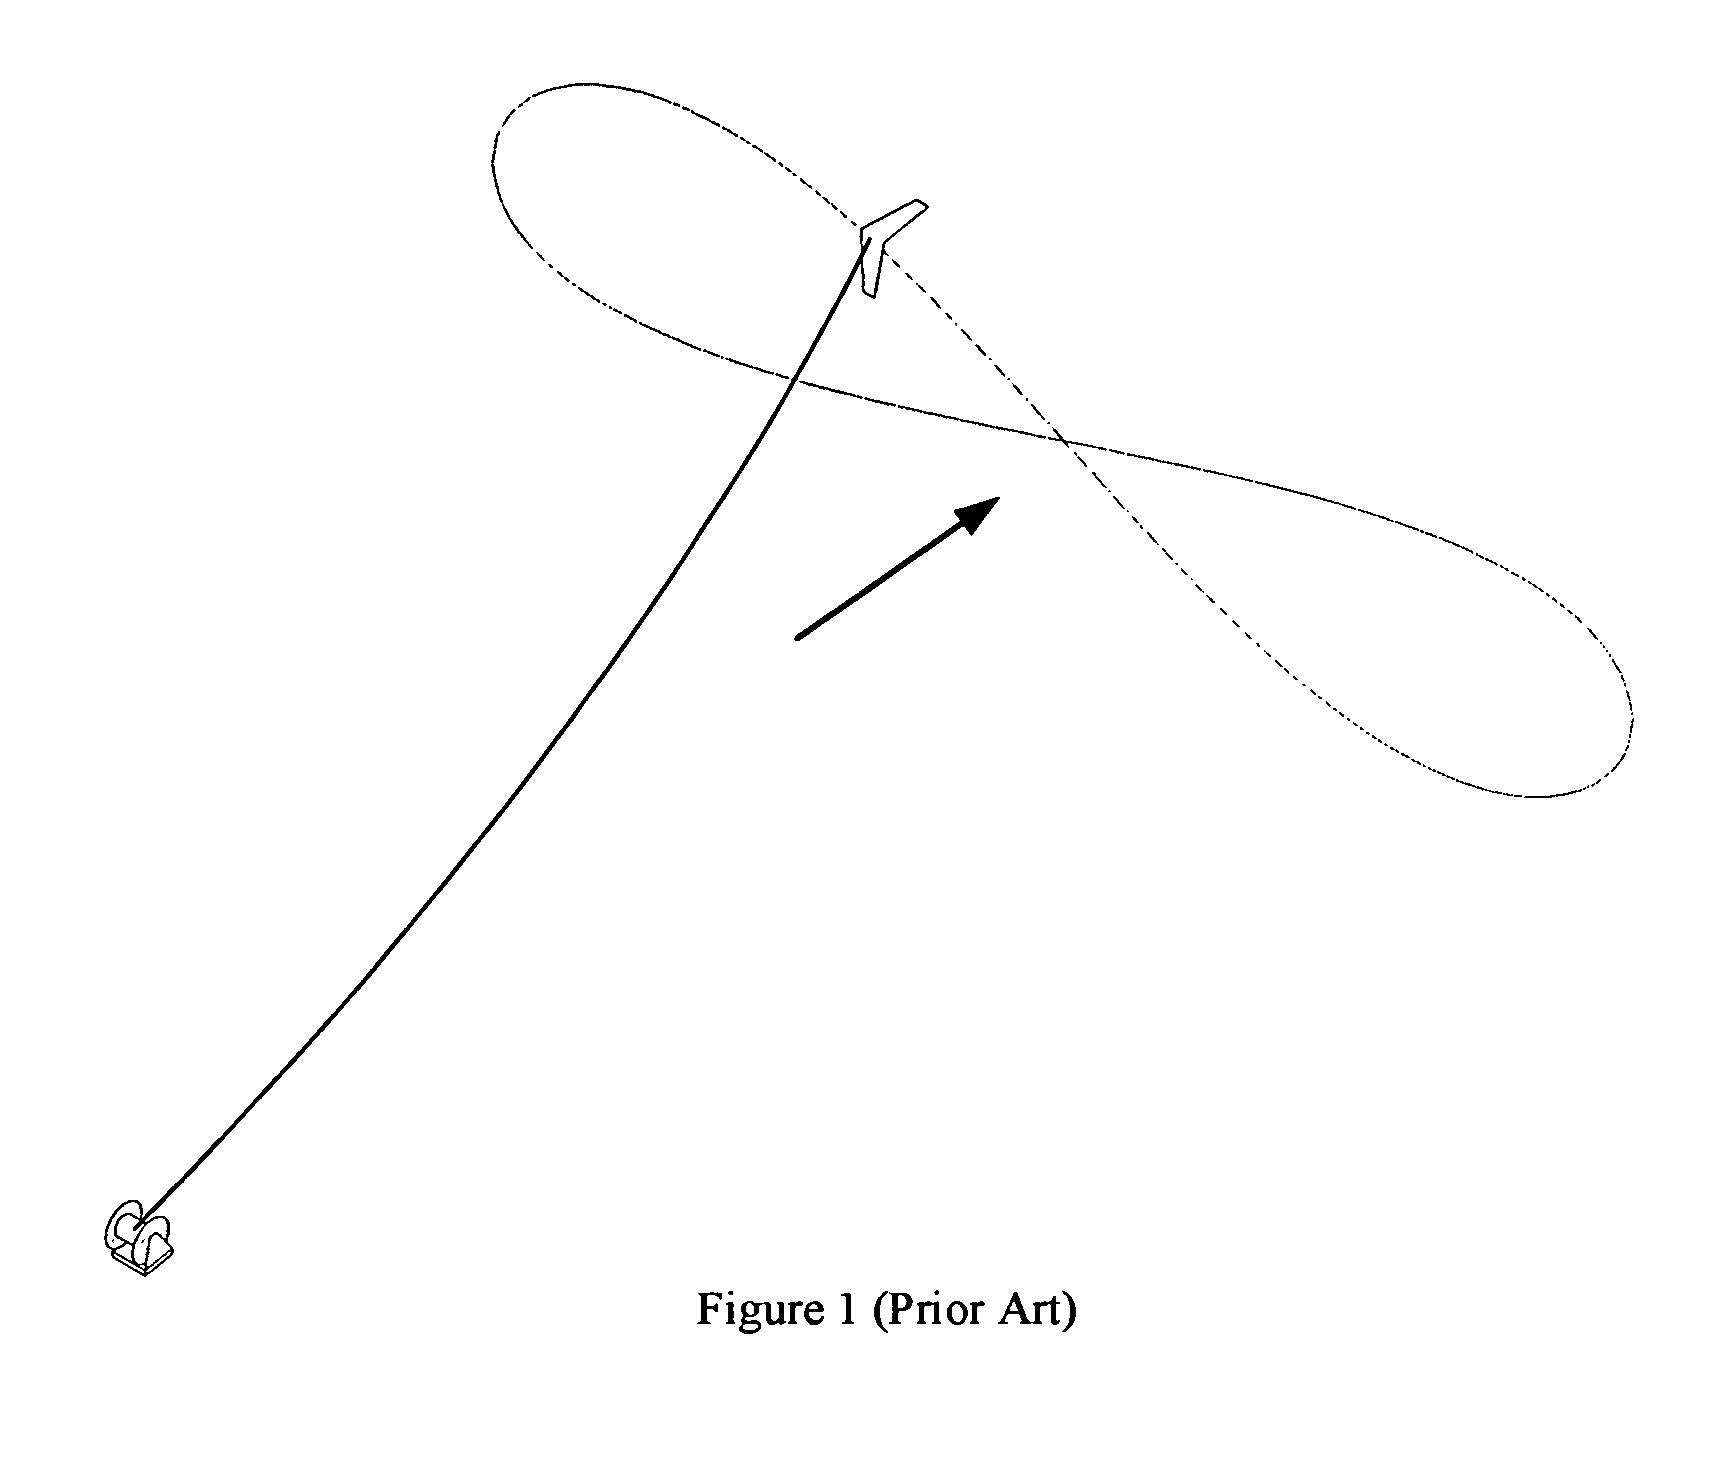 Multi-tether cross-wind kite power